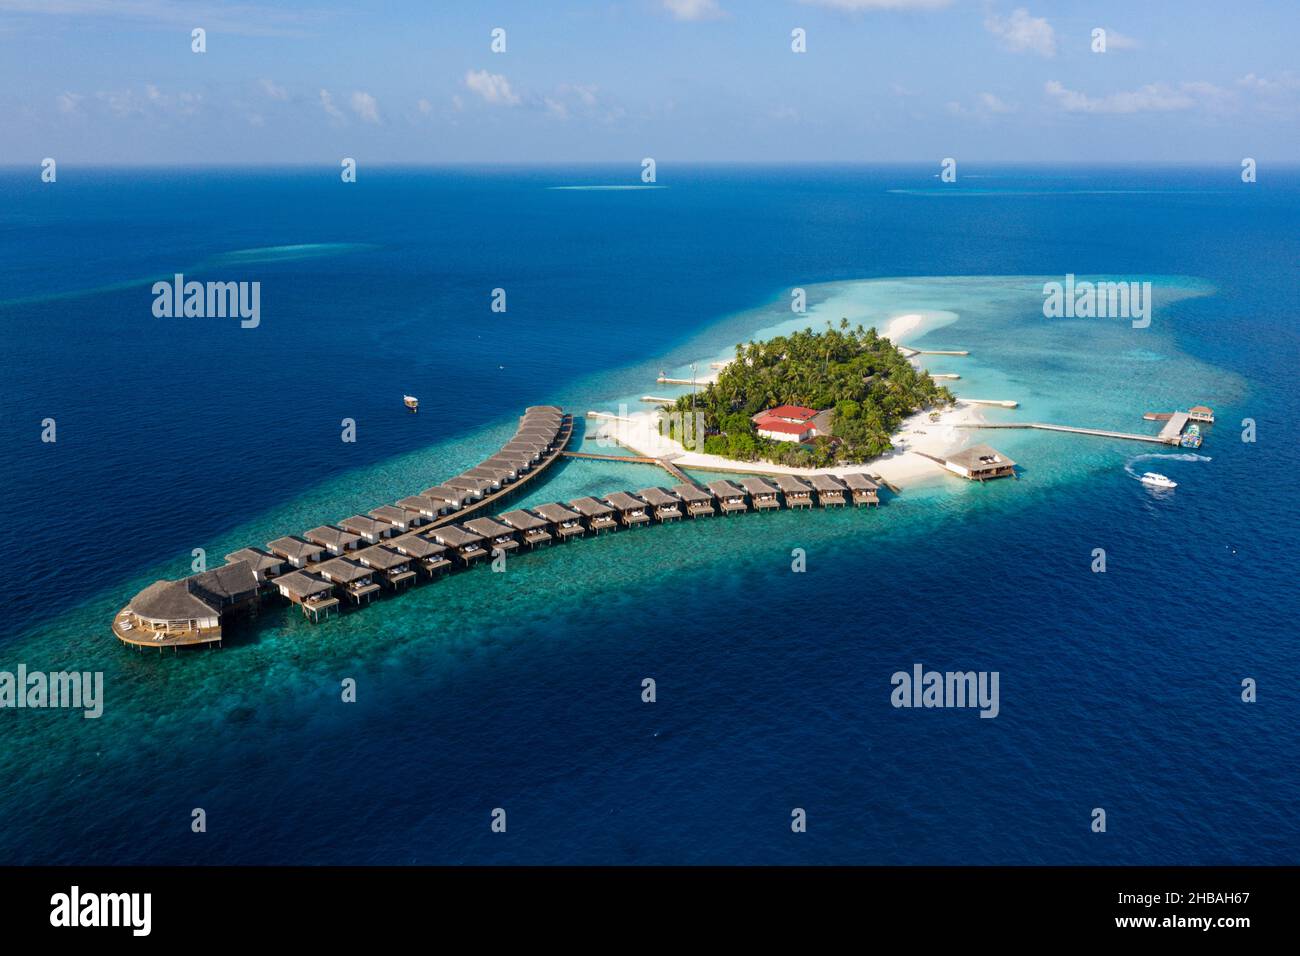 Vacation Island Dhiggiri, Felidhu Atoll, Indian Ocean, Maldives Stock Photo